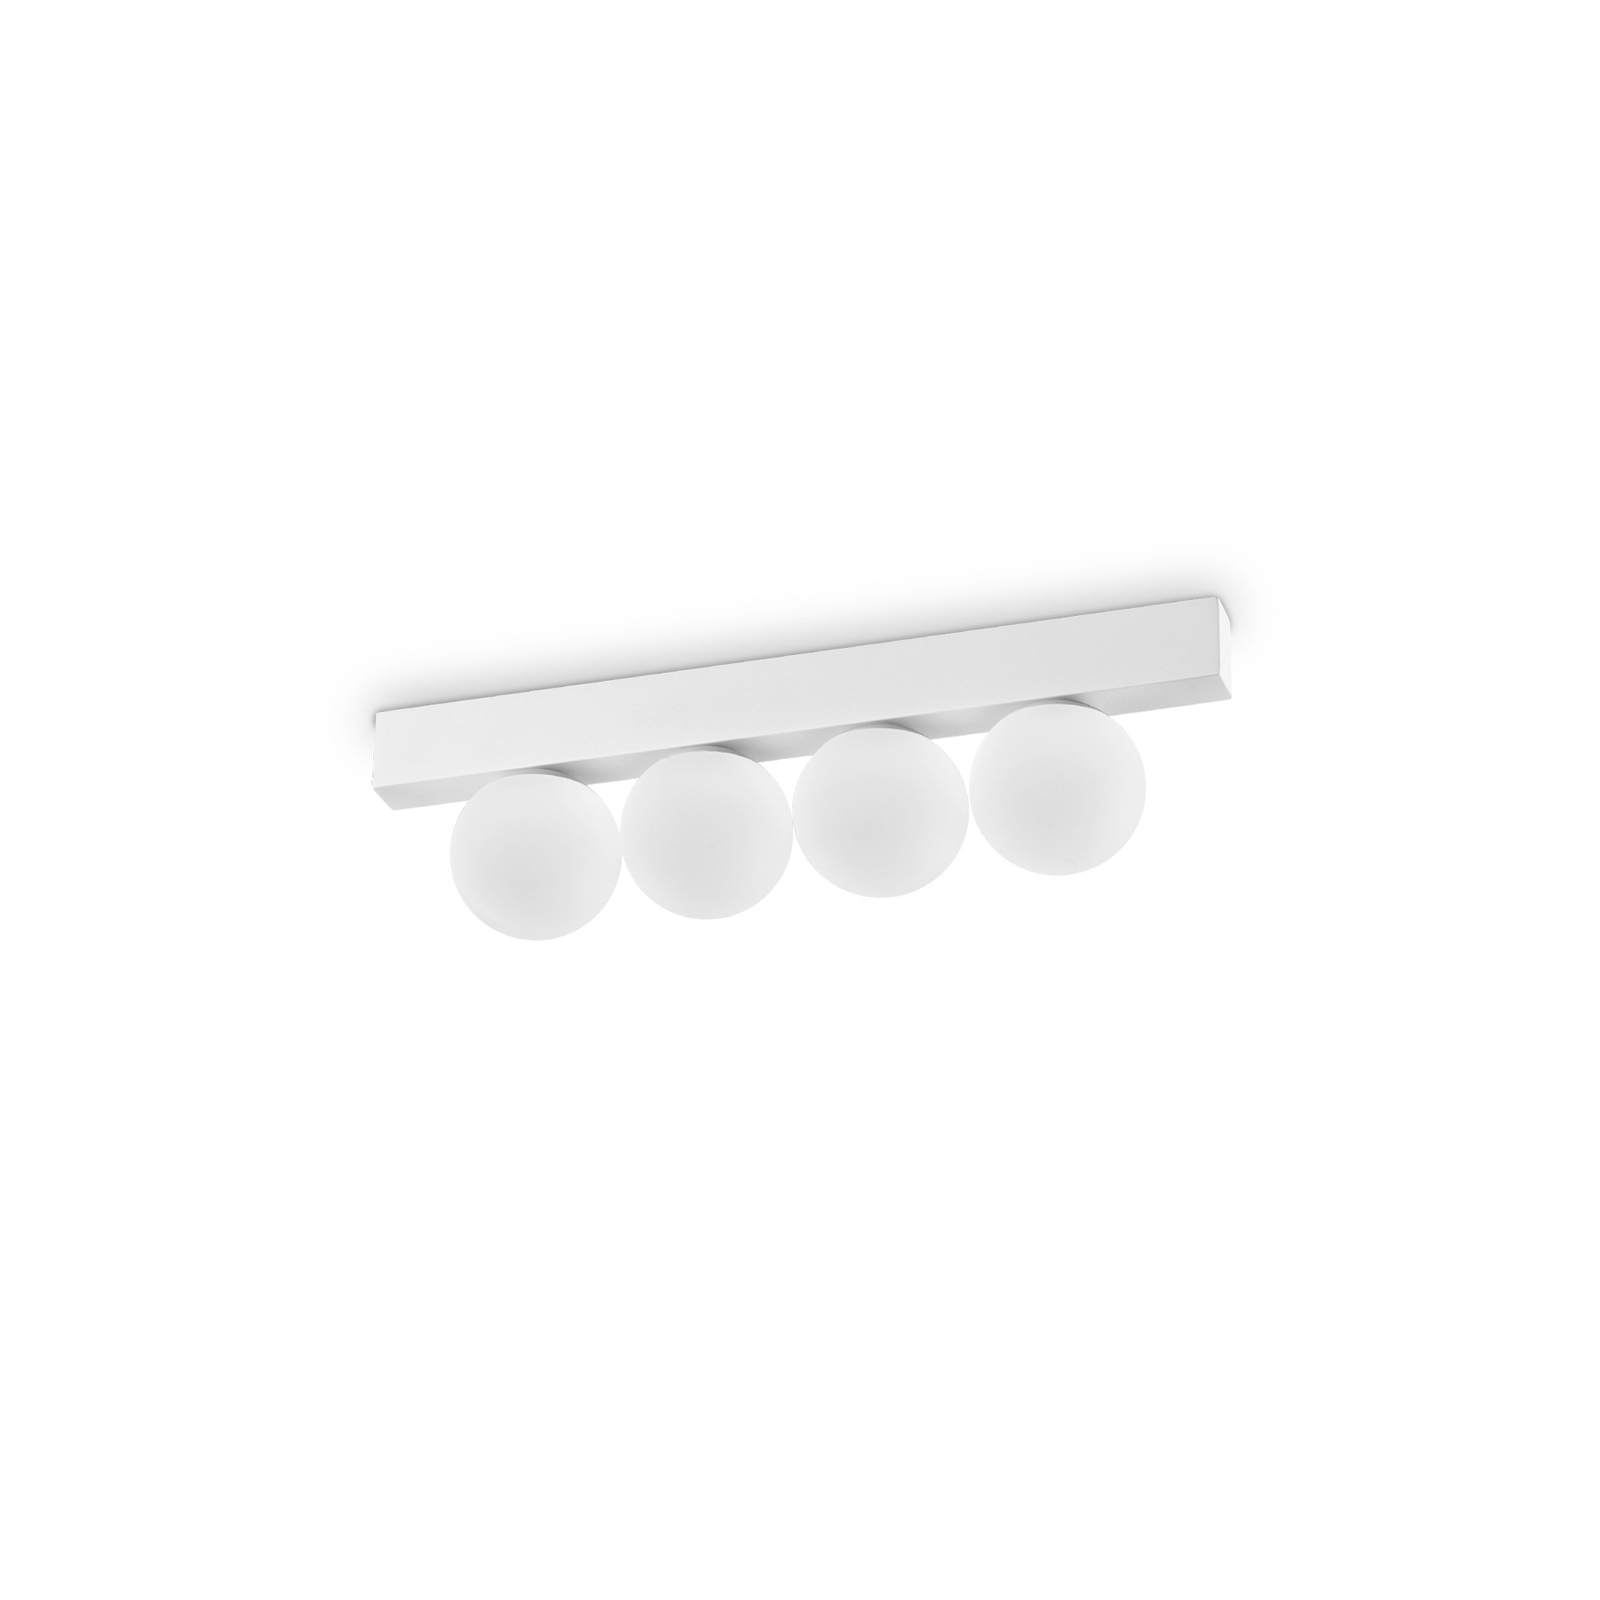 Ideal Lux LED-Deckenlampe Ping Pong weiß 4-flammig, Opalglas